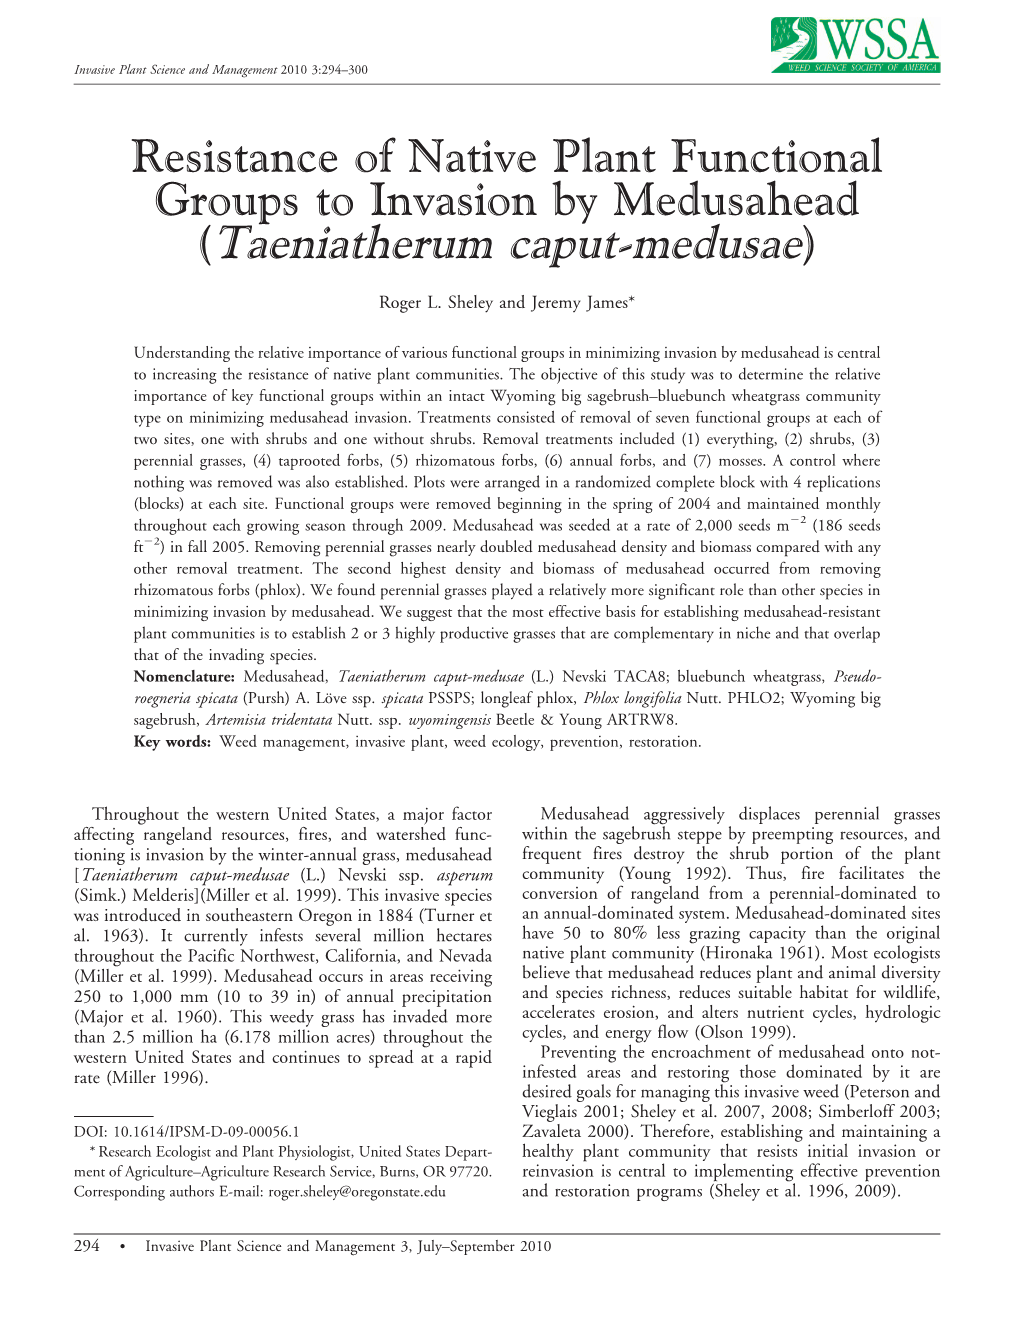 Resistance of Native Plant Functional Groups to Invasion by Medusahead (Taeniatherum Caput-Medusae)